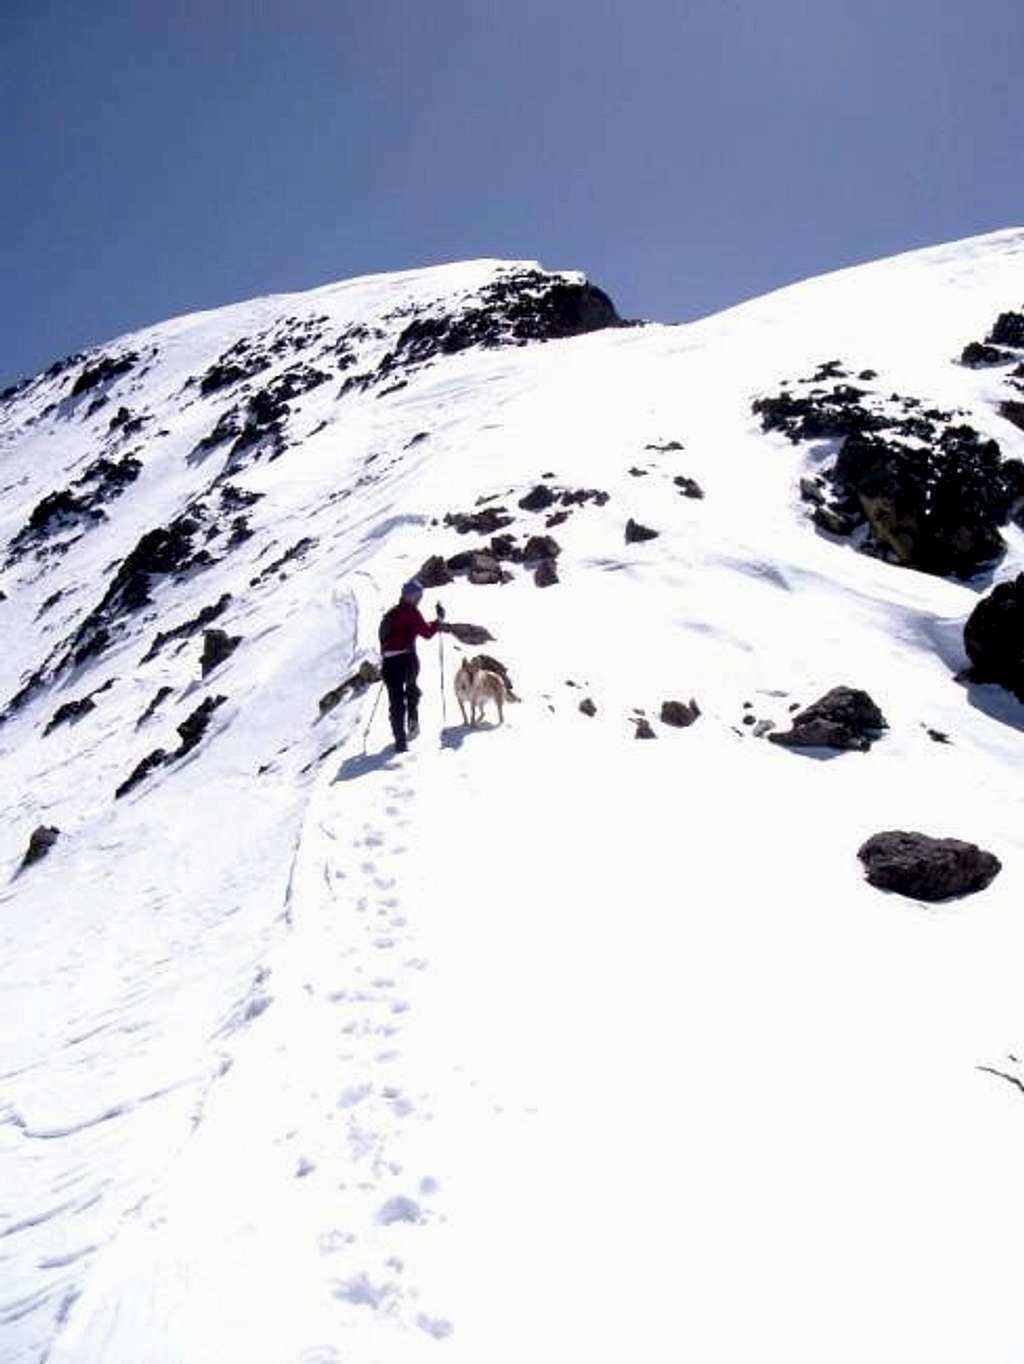 Upper NW ridge in May 2004